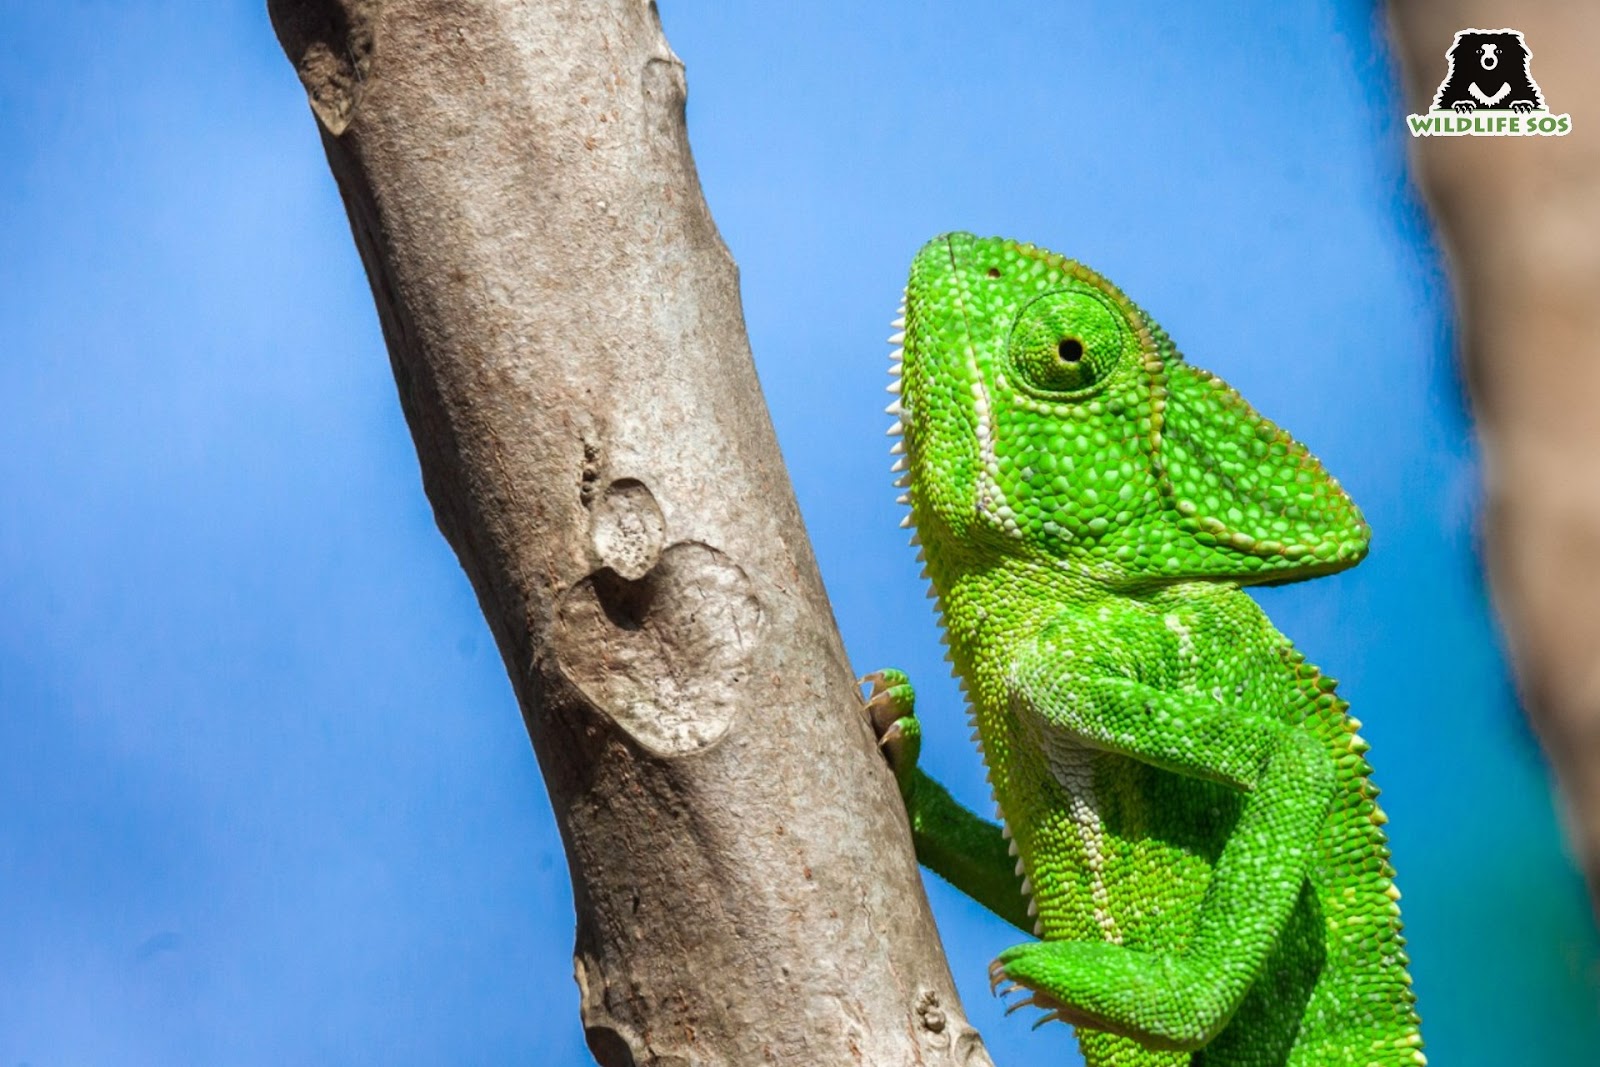 chameleon climbing a stalk